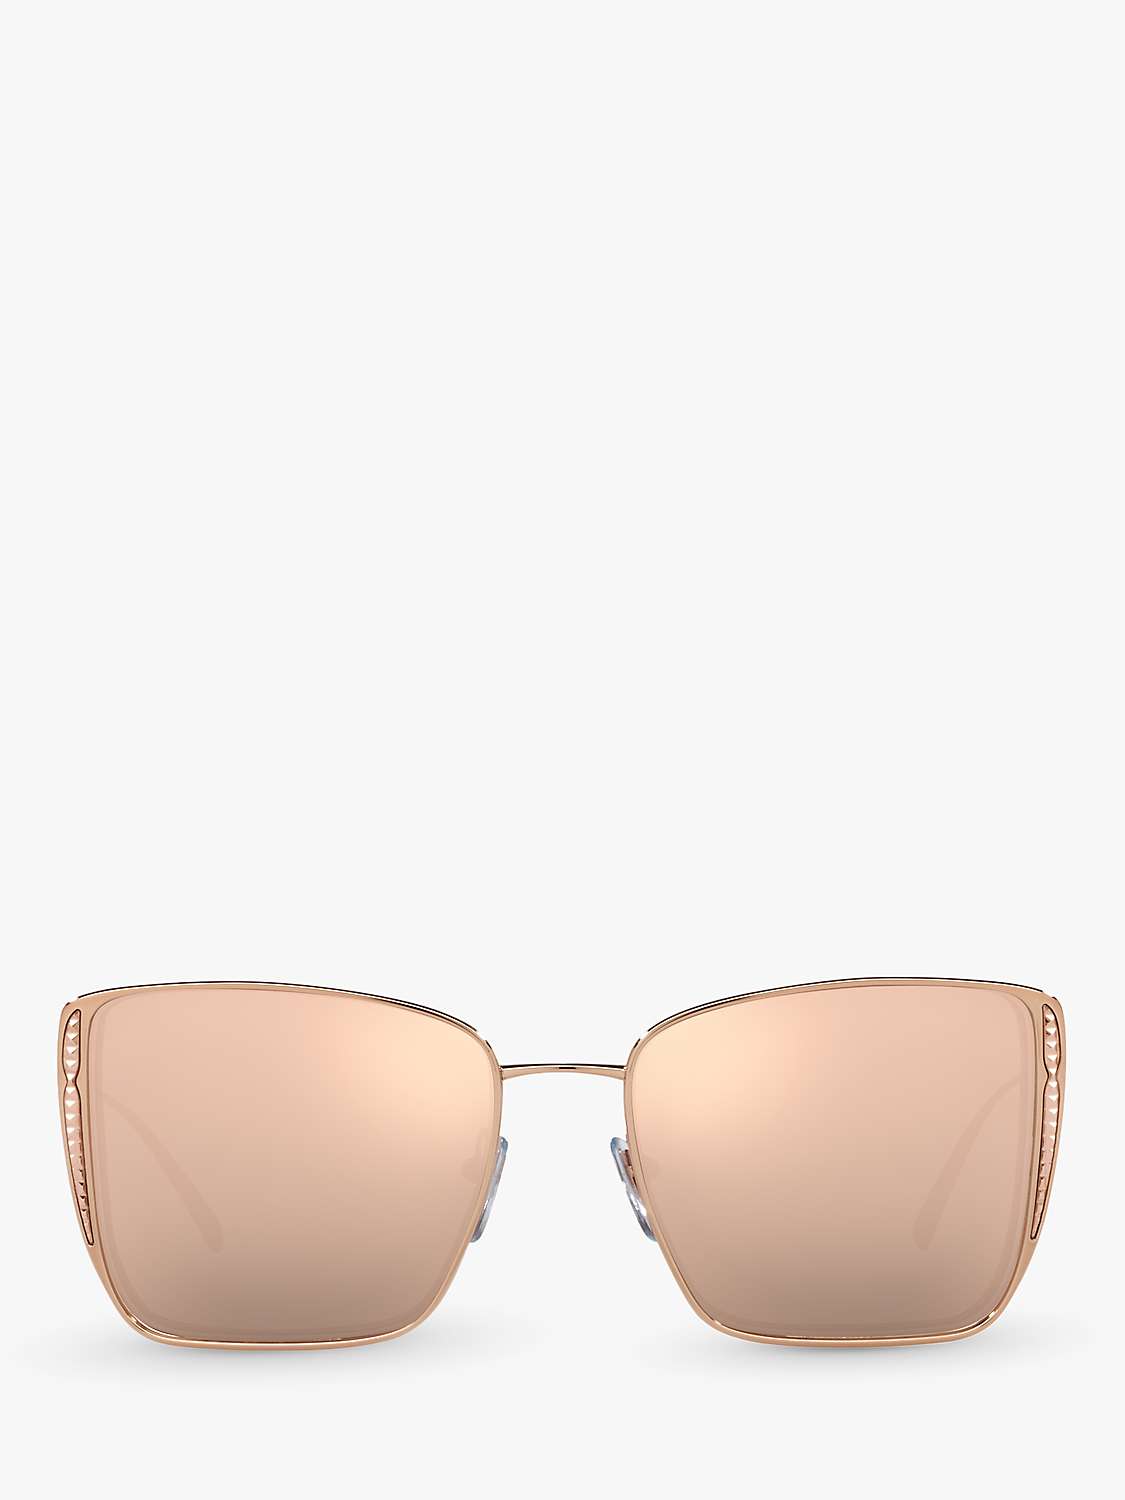 Buy BVLGARI BV6176 Women's Square Sunglasses, Pink Gold/Gold Mirror Online at johnlewis.com